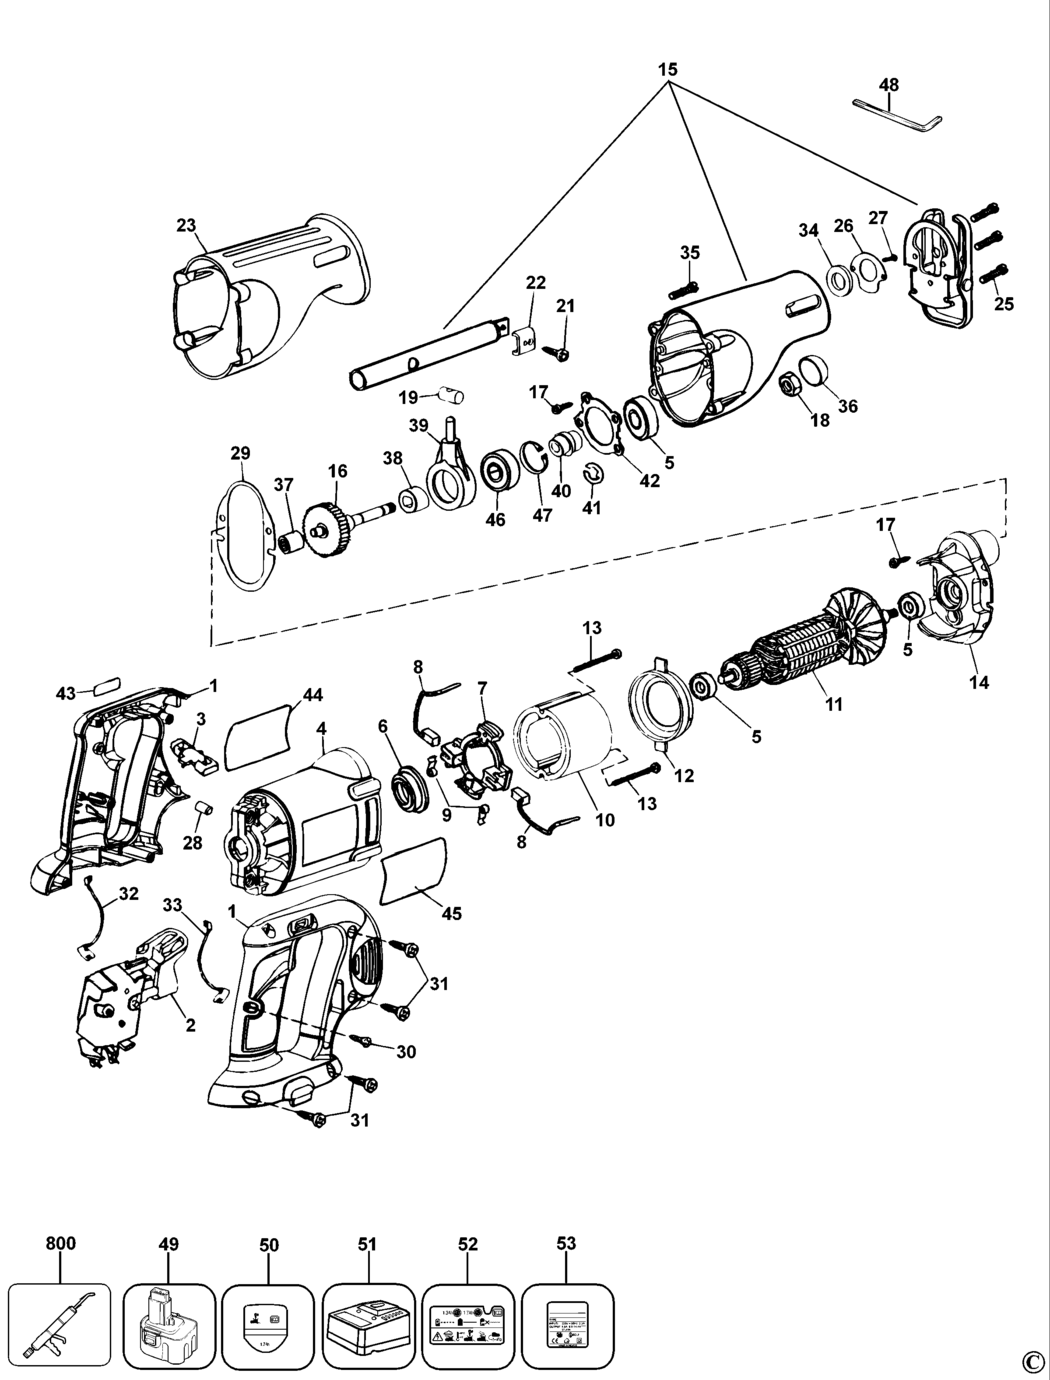 Elu RSA18 Type 1 Cut Saw Spare Parts